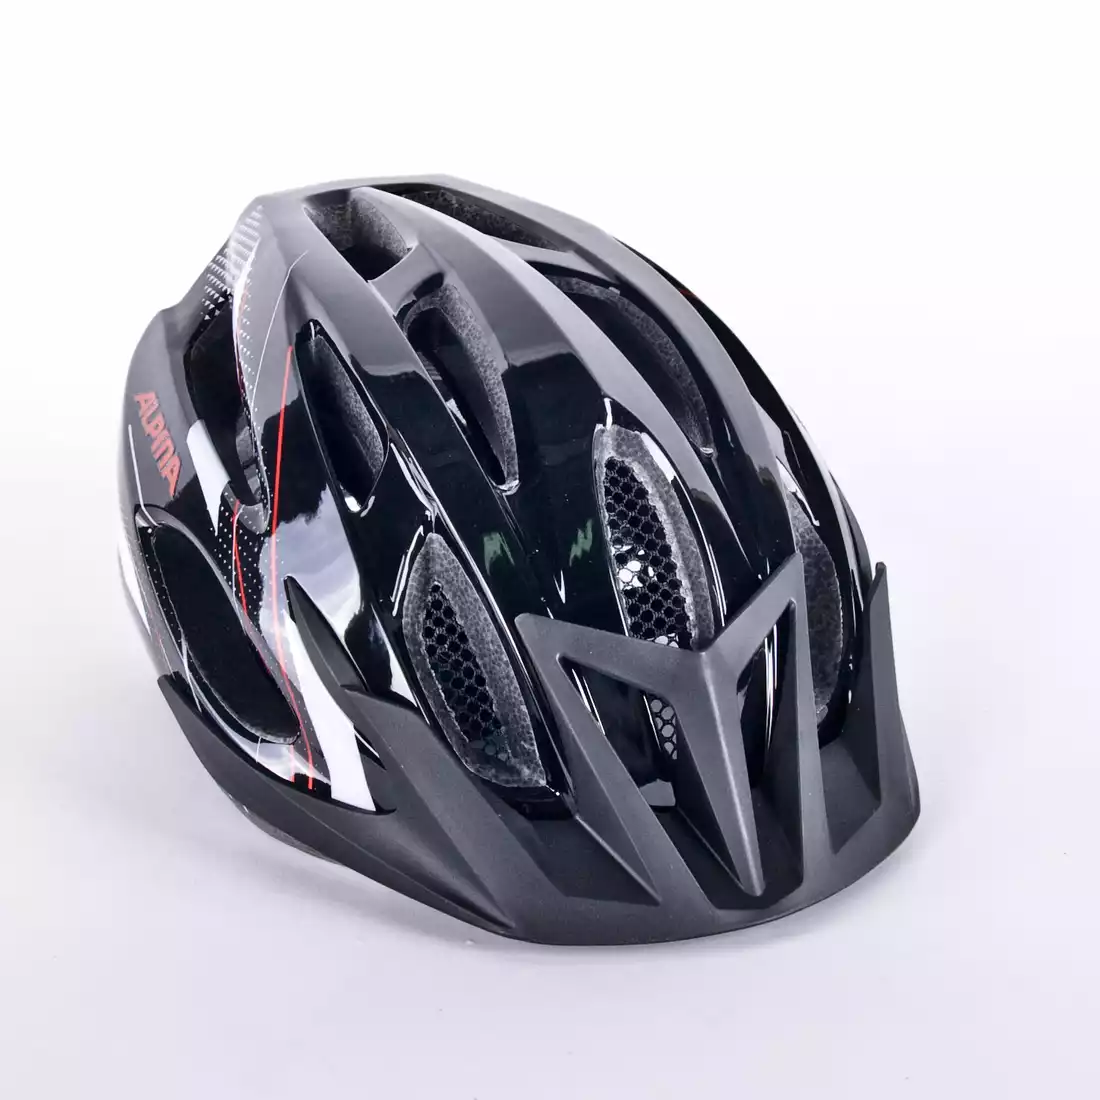 Alpina MTB 17 bicicleta casco casco de rueda 